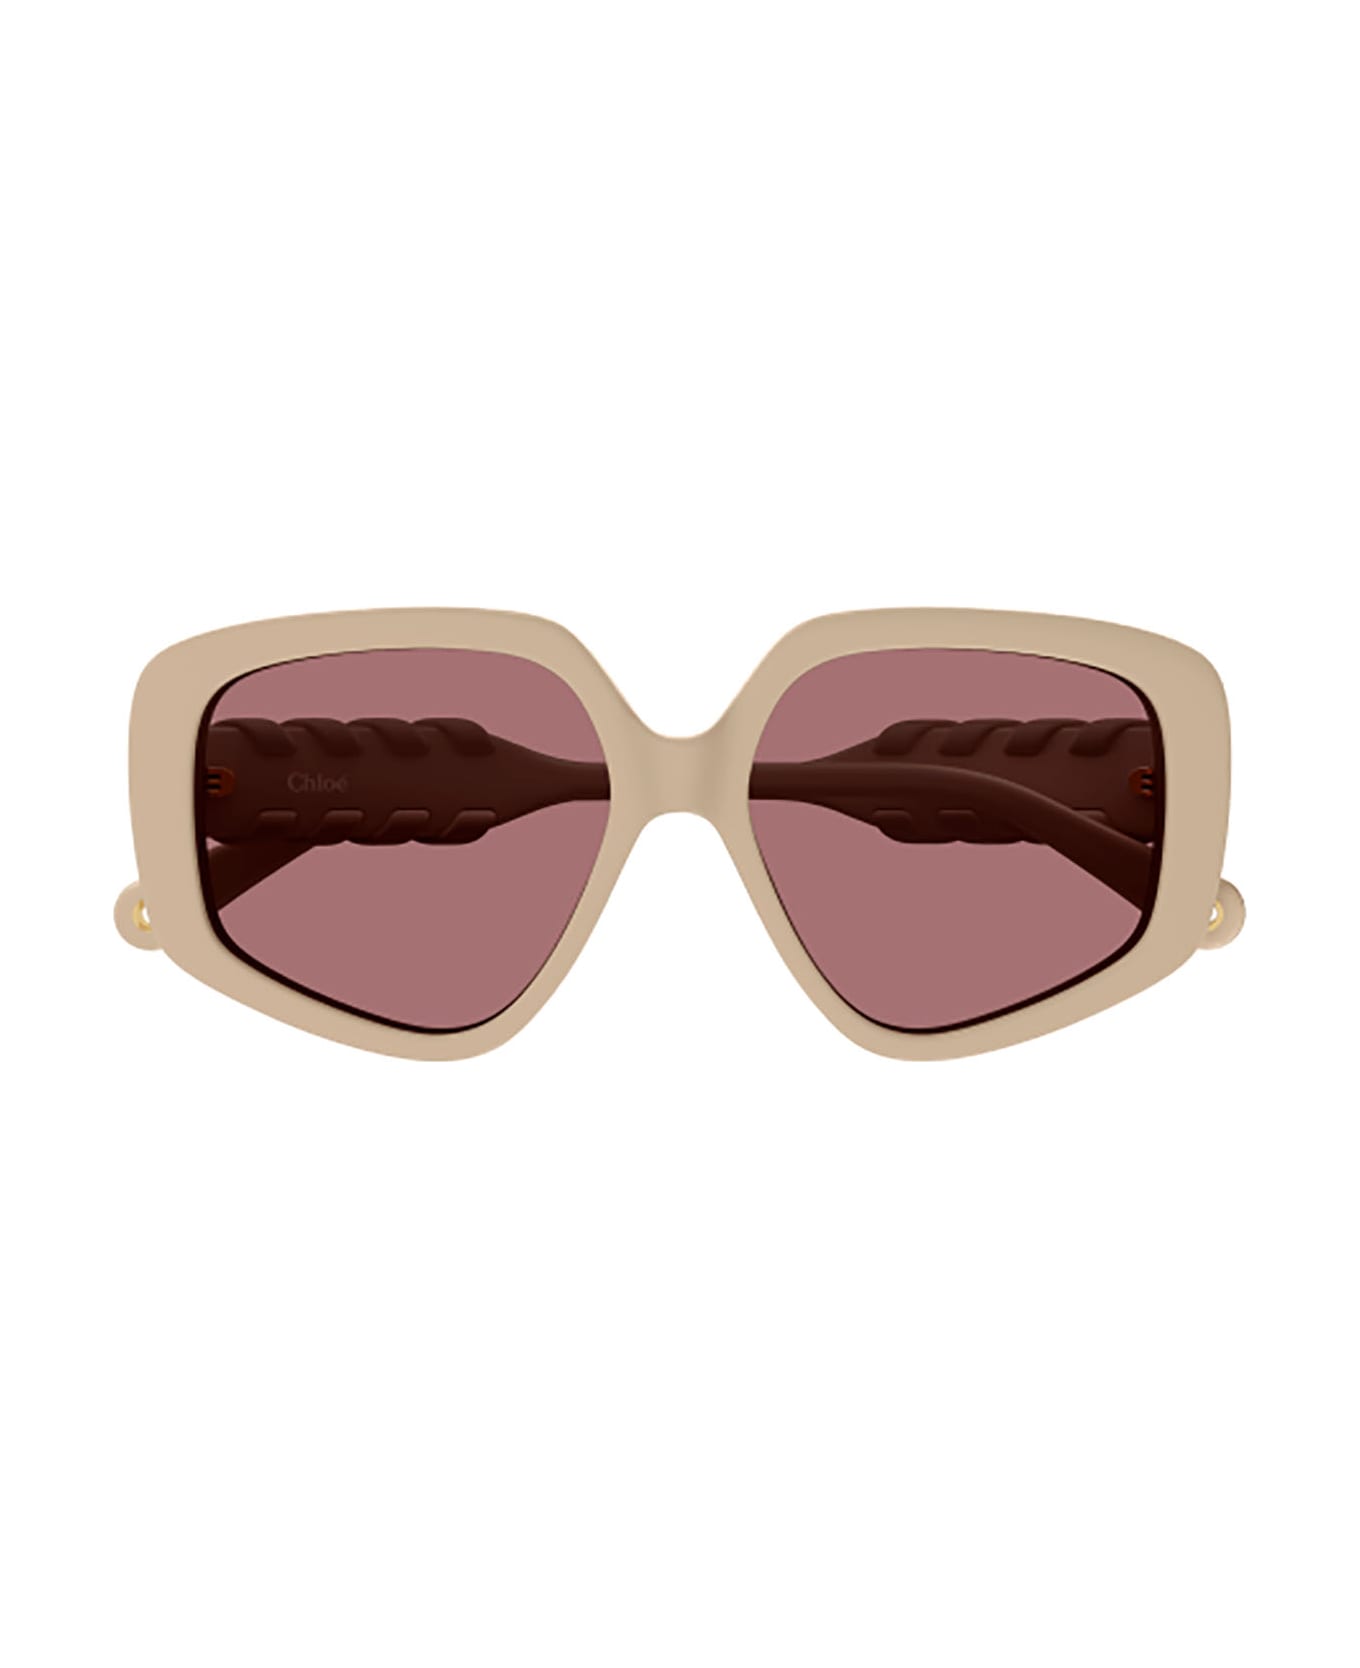 Chloé Eyewear CH0210S Sunglasses - Ivory Ivory Red